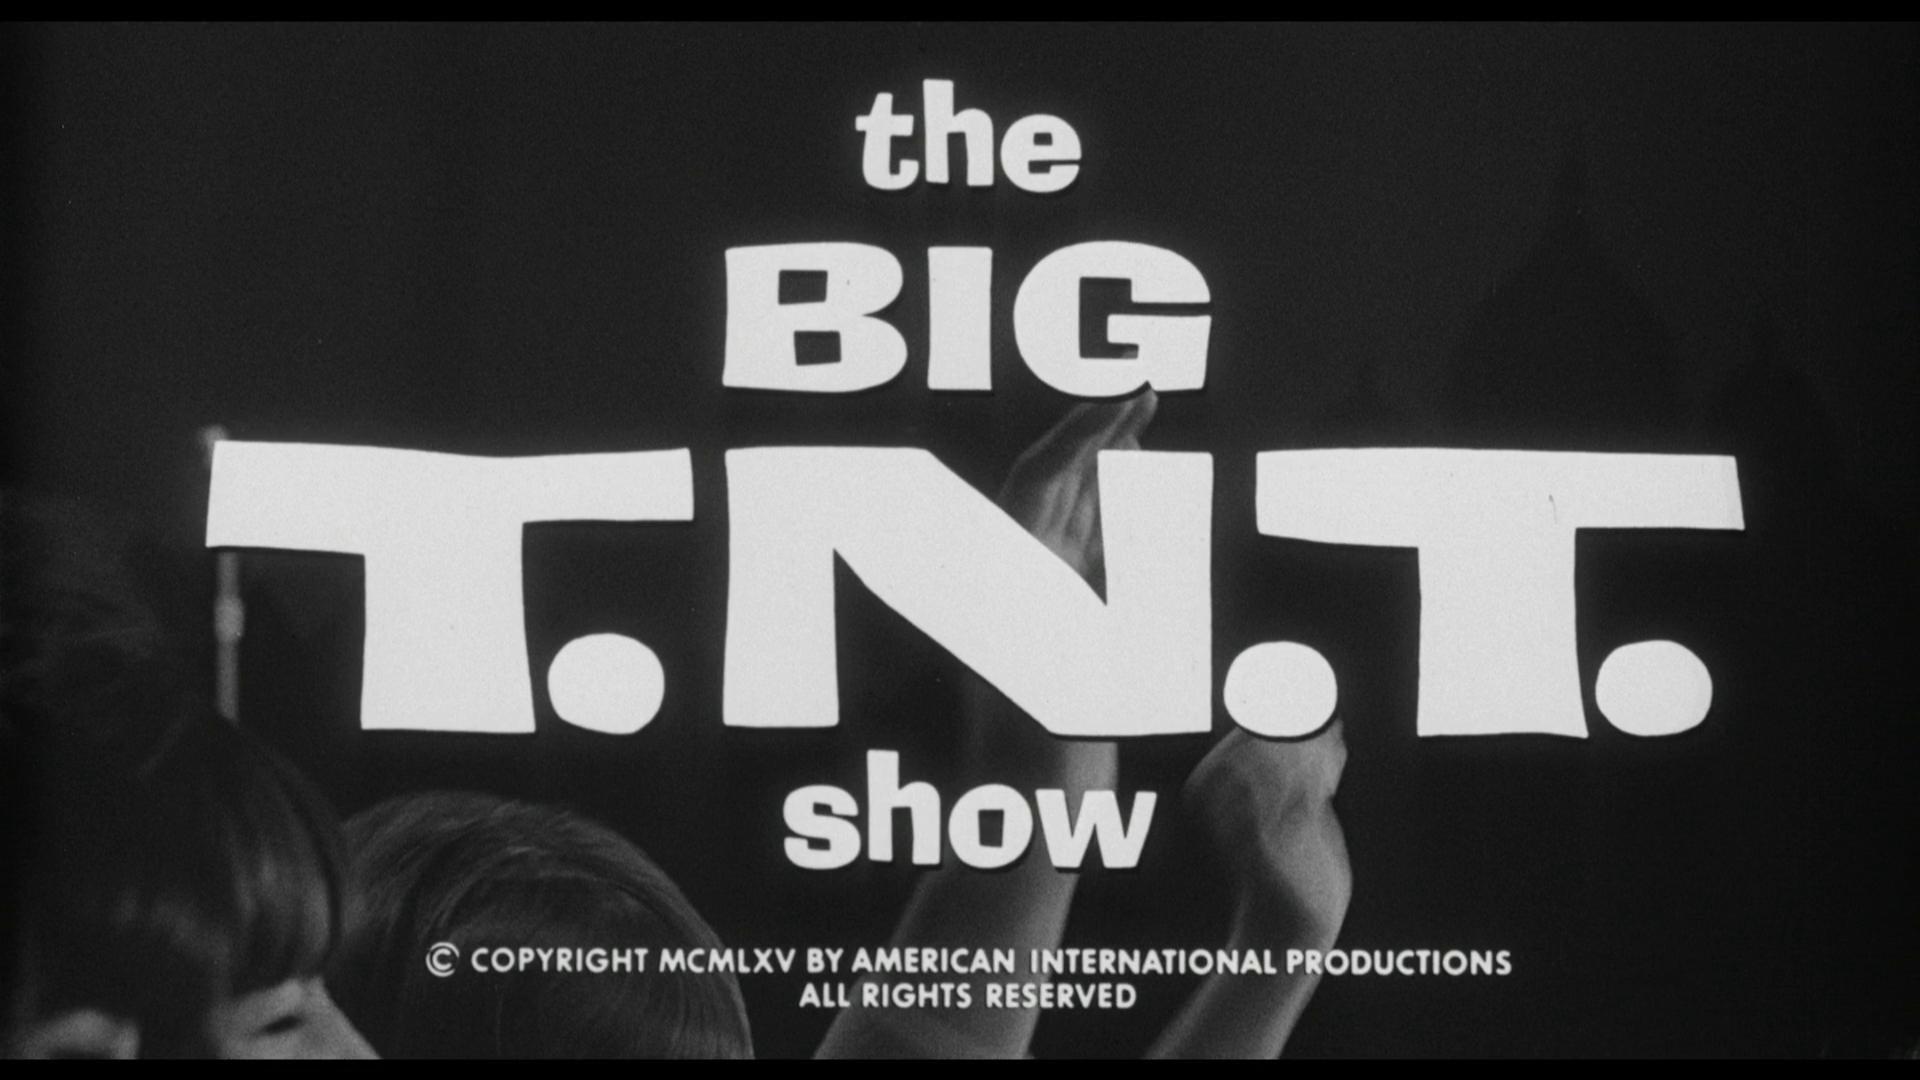 The Big T.N.T. Show backdrop